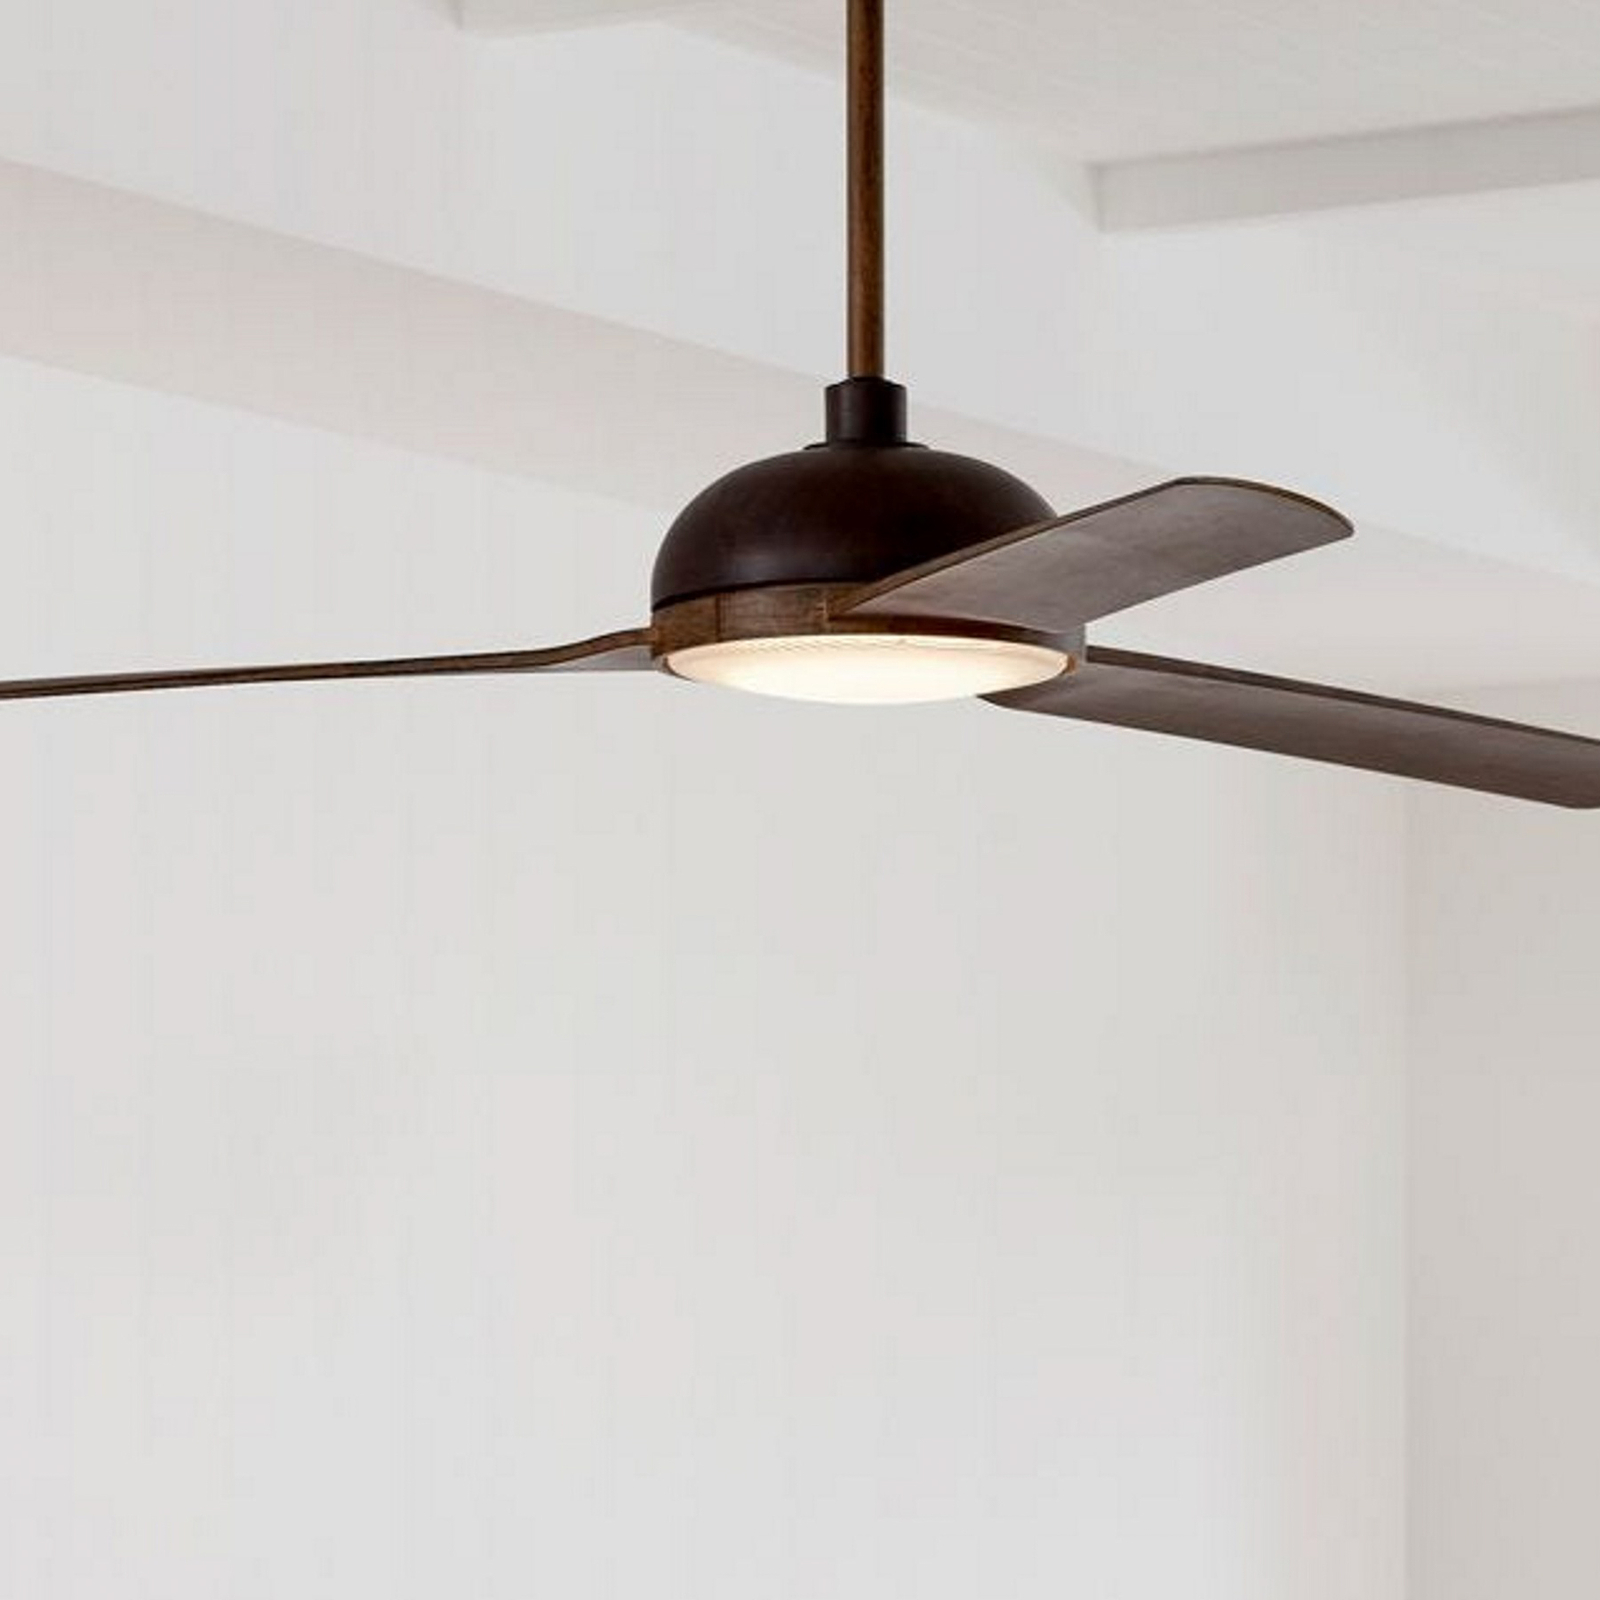 Beacon ceiling fan with light Unione, bronze/koa, quiet